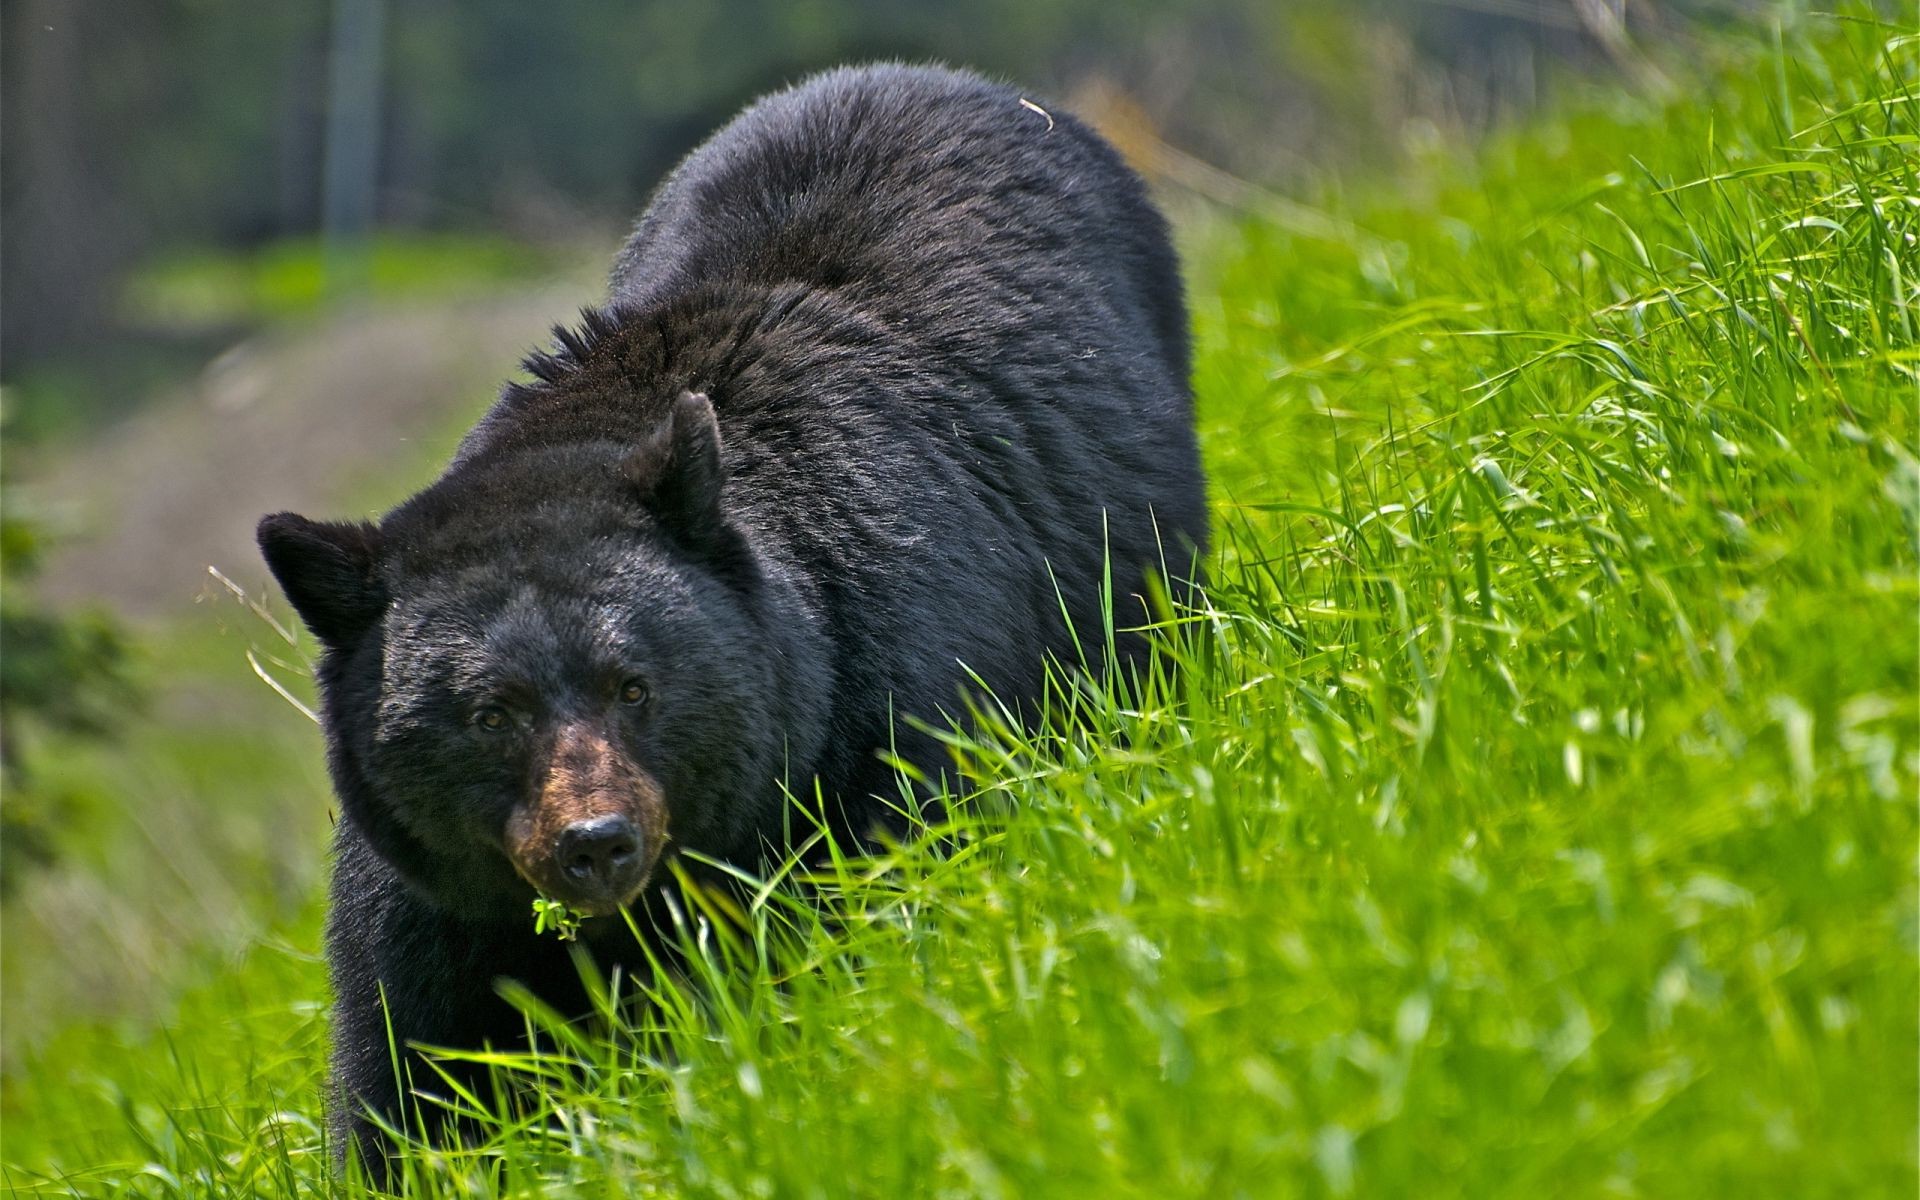 bears grass mammal nature wildlife outdoors fur